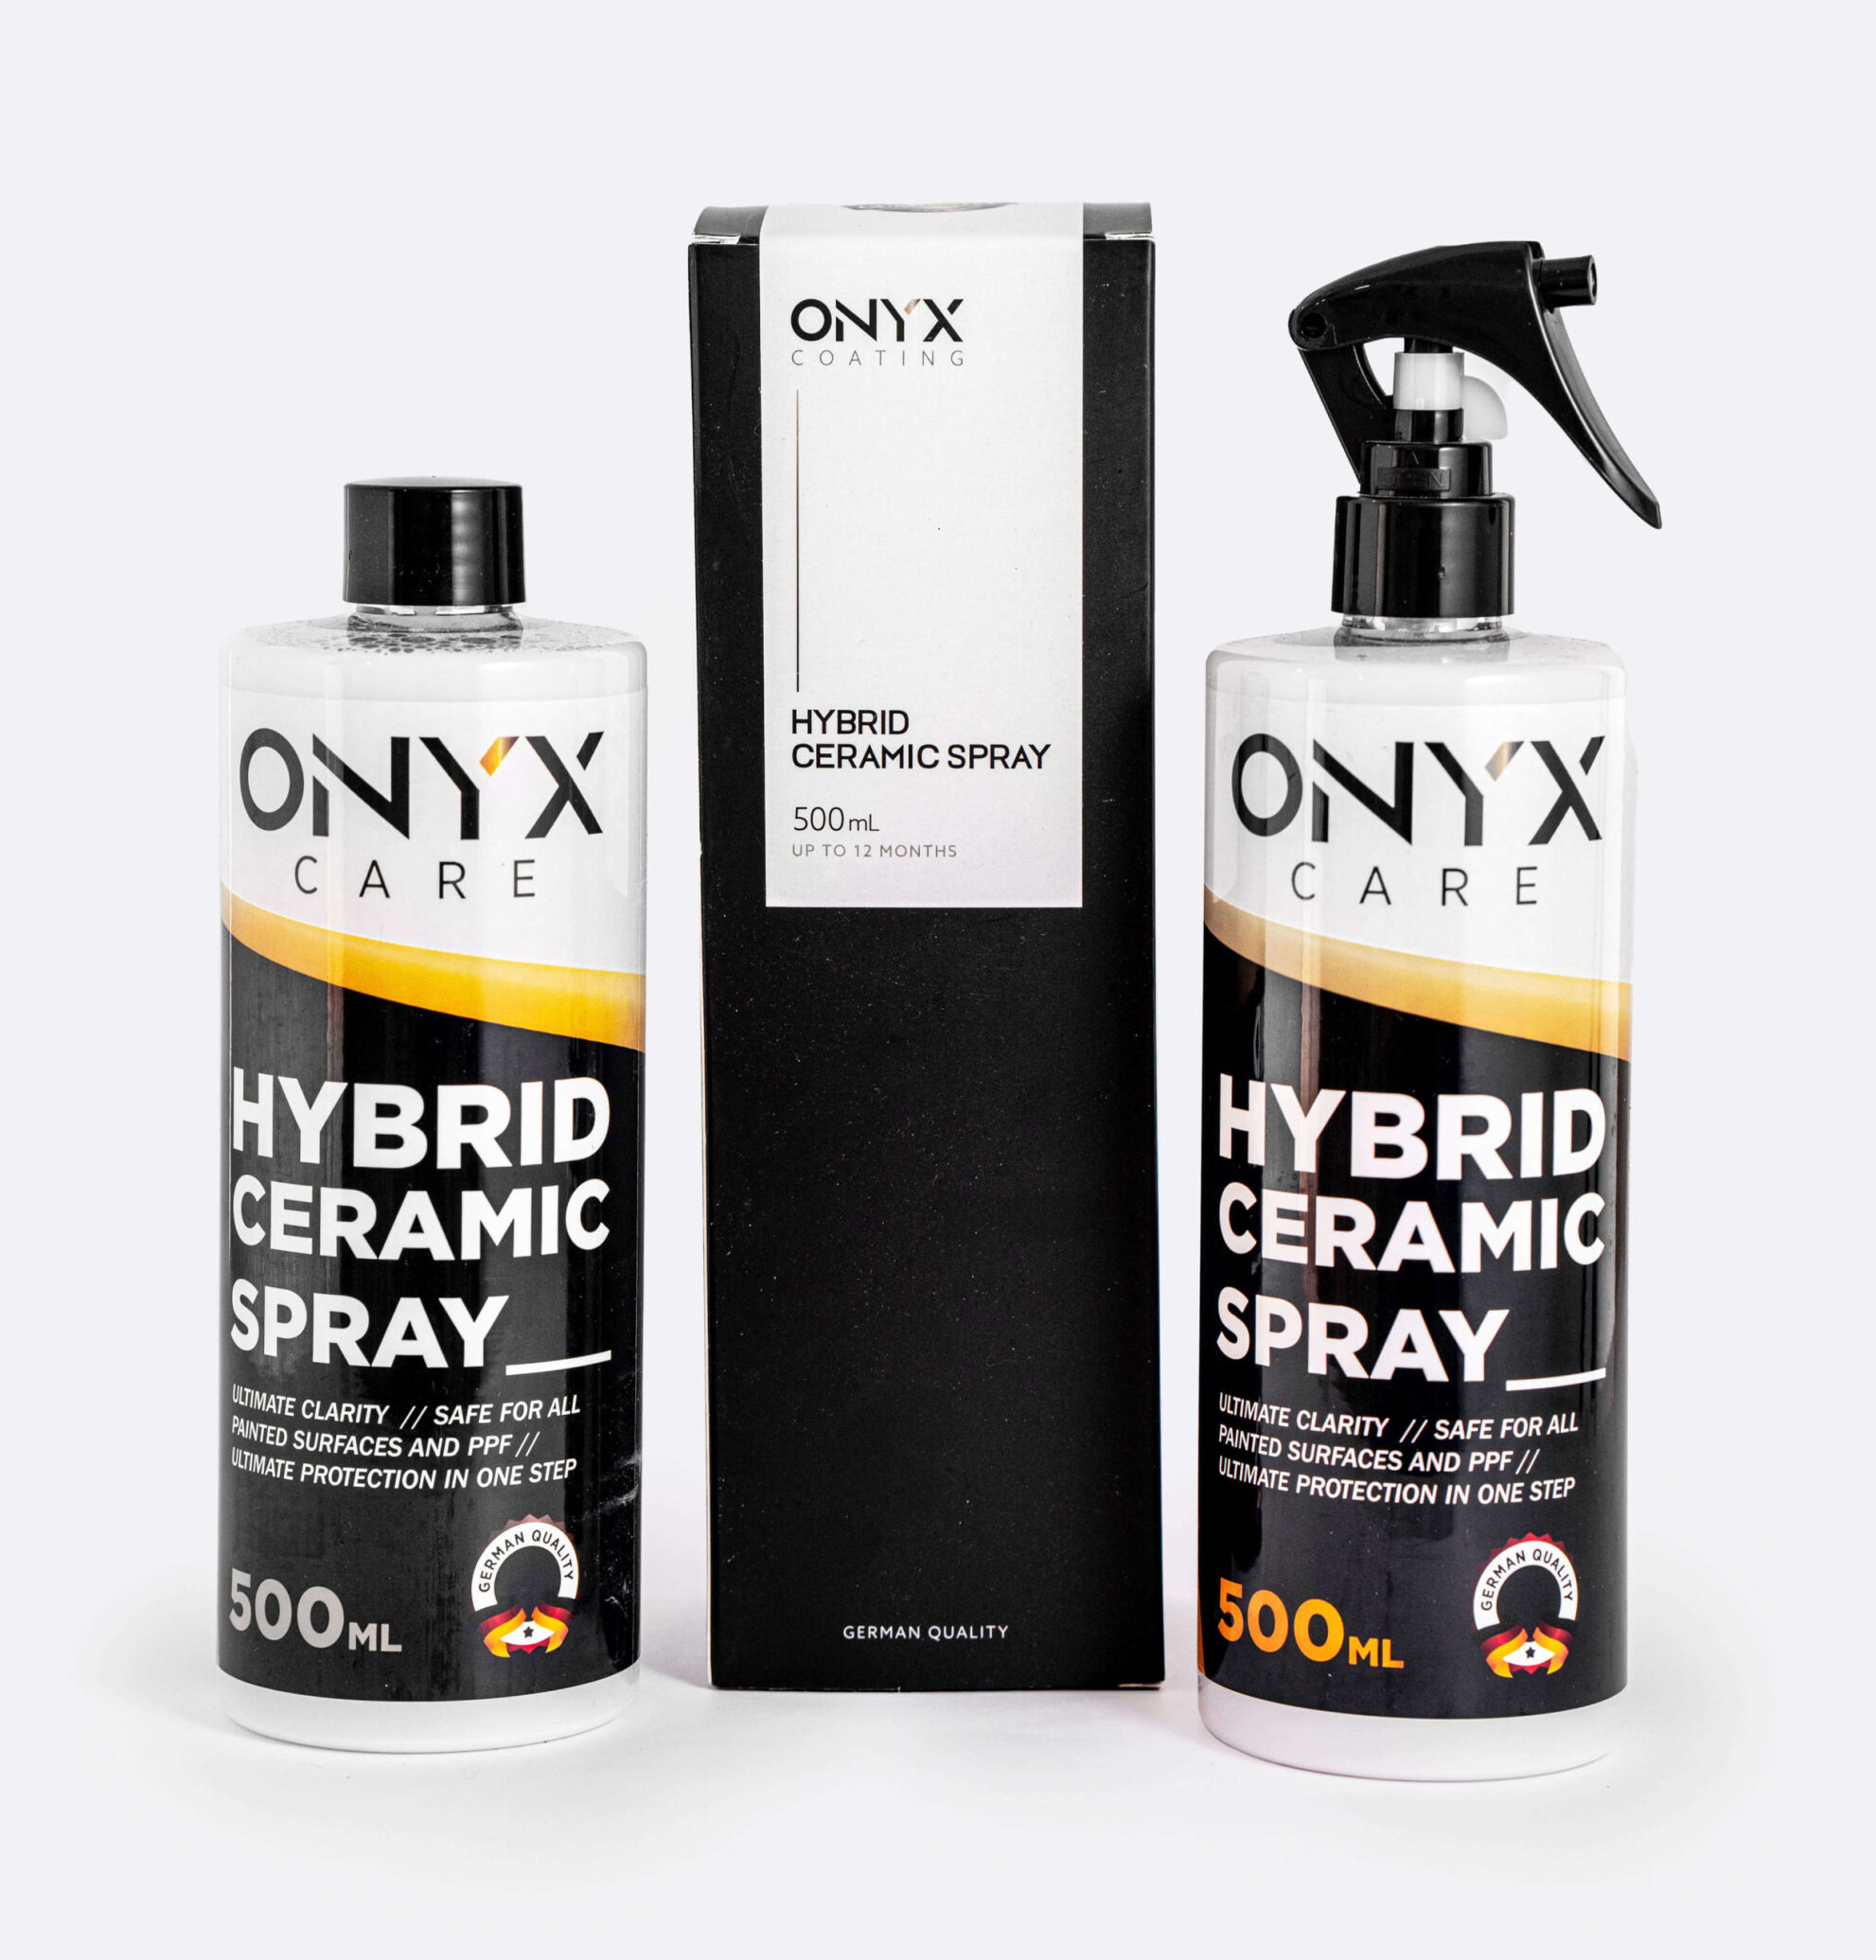  Onyx Hybrid Ceramic Spray 